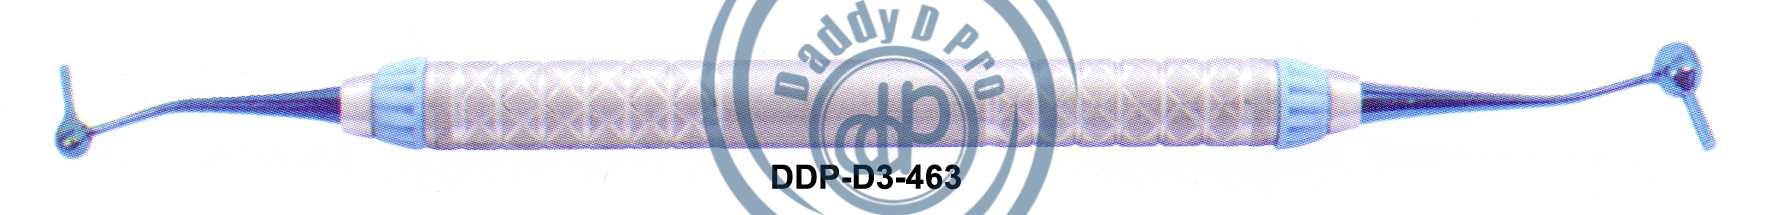 images/DDP-D3-463.png